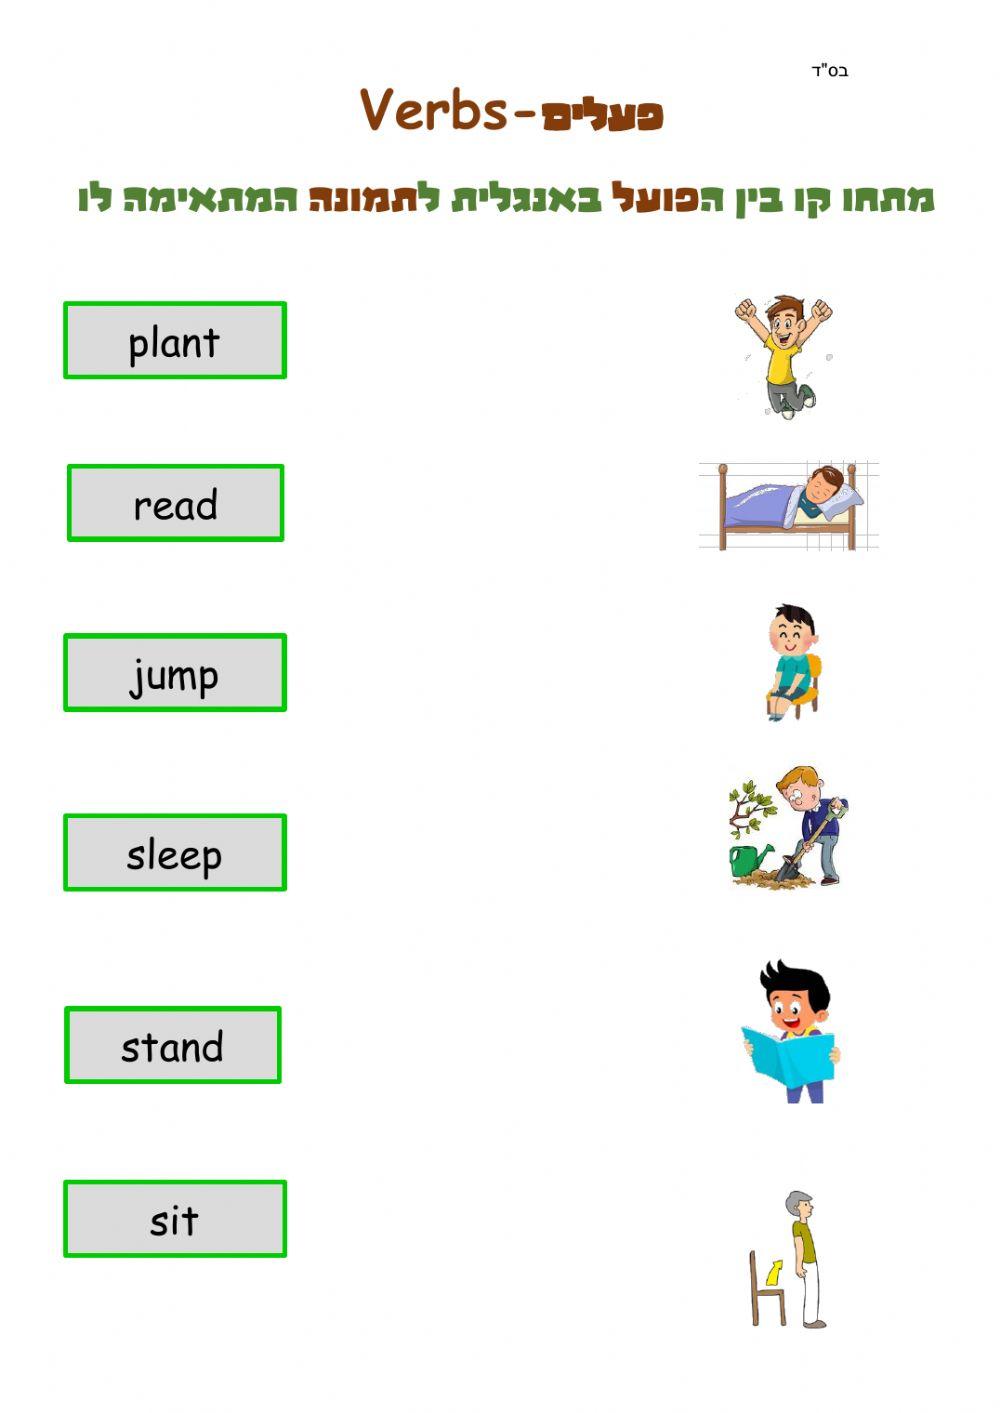 Basic level verbs